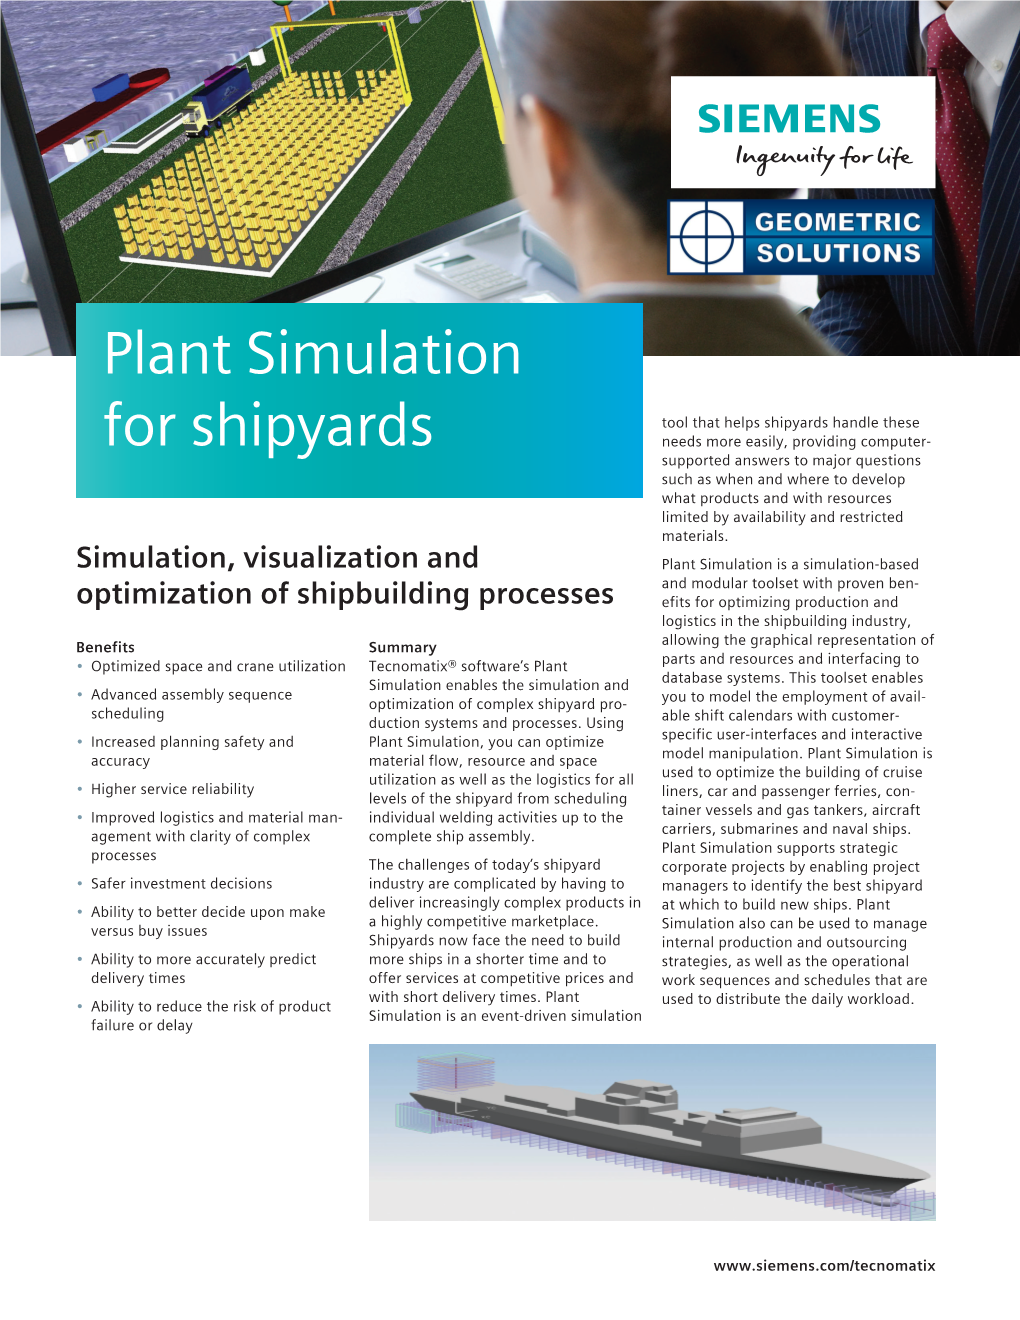 Plant Simulation for Shipyards